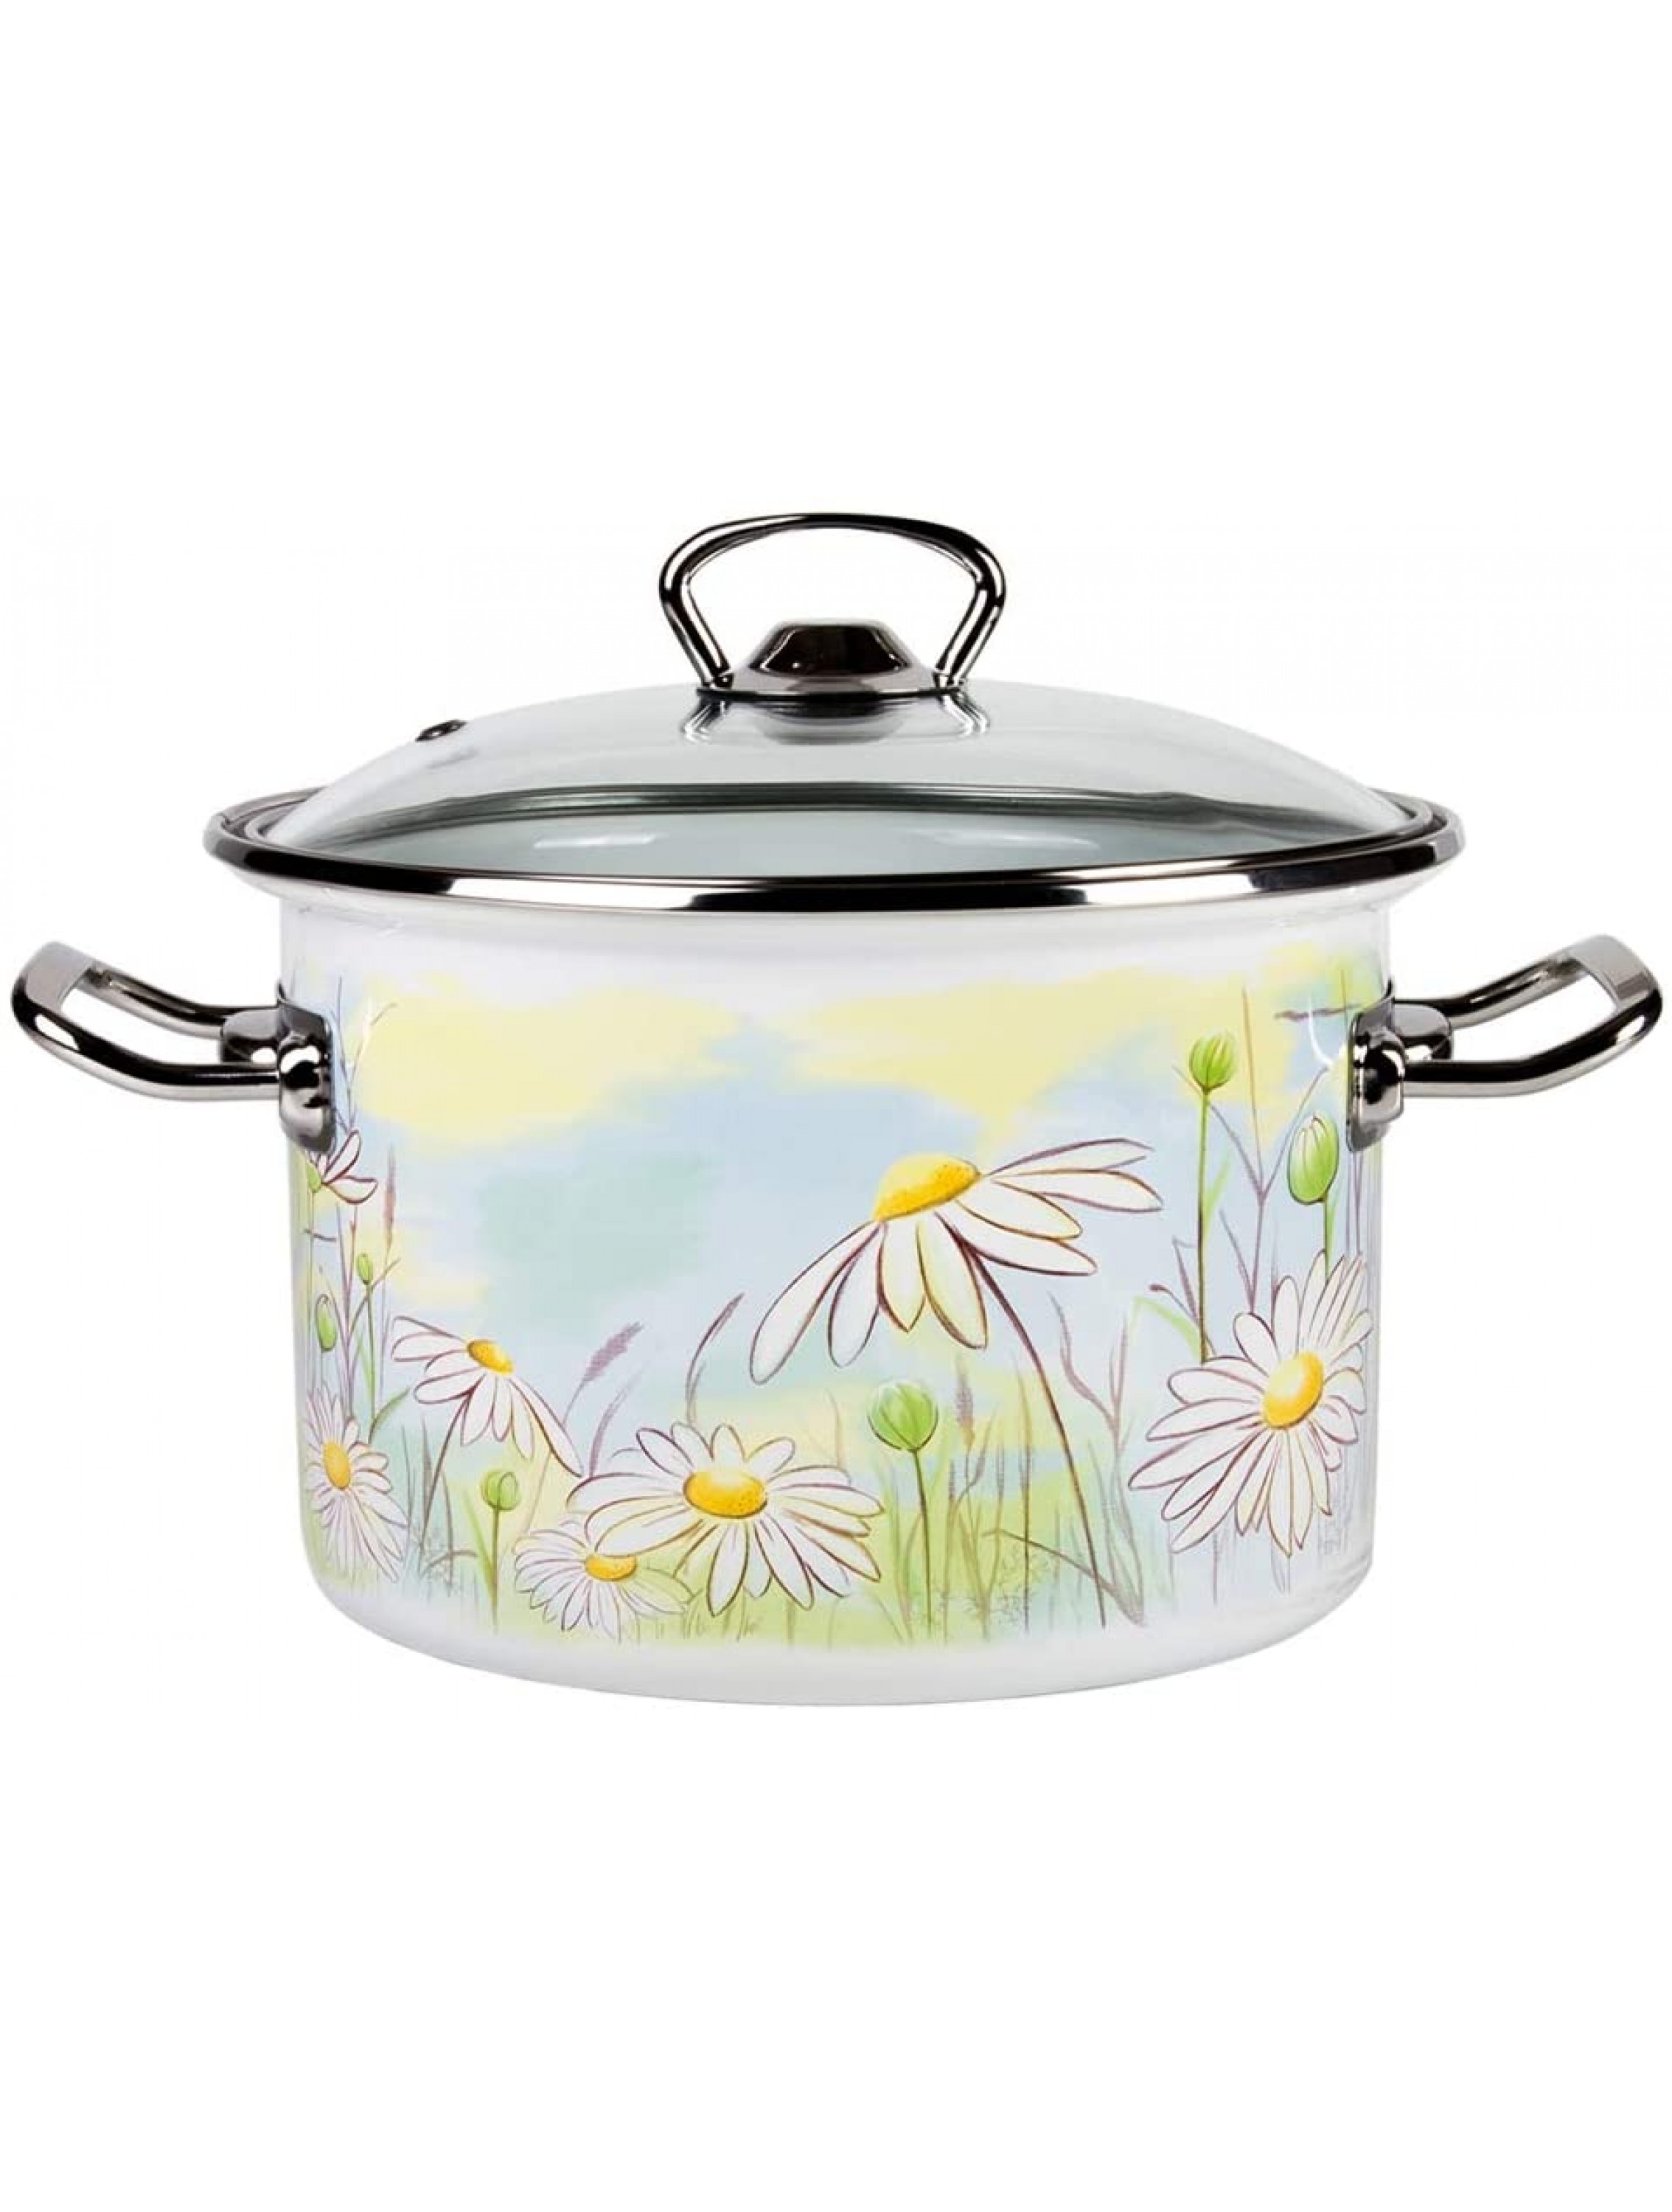 Enamel Stock Pot Daisy Fields Enamel Cooking Pot Enameled Pot with Lid 5.8-qt. 5.5 L - BU5JVXYP9